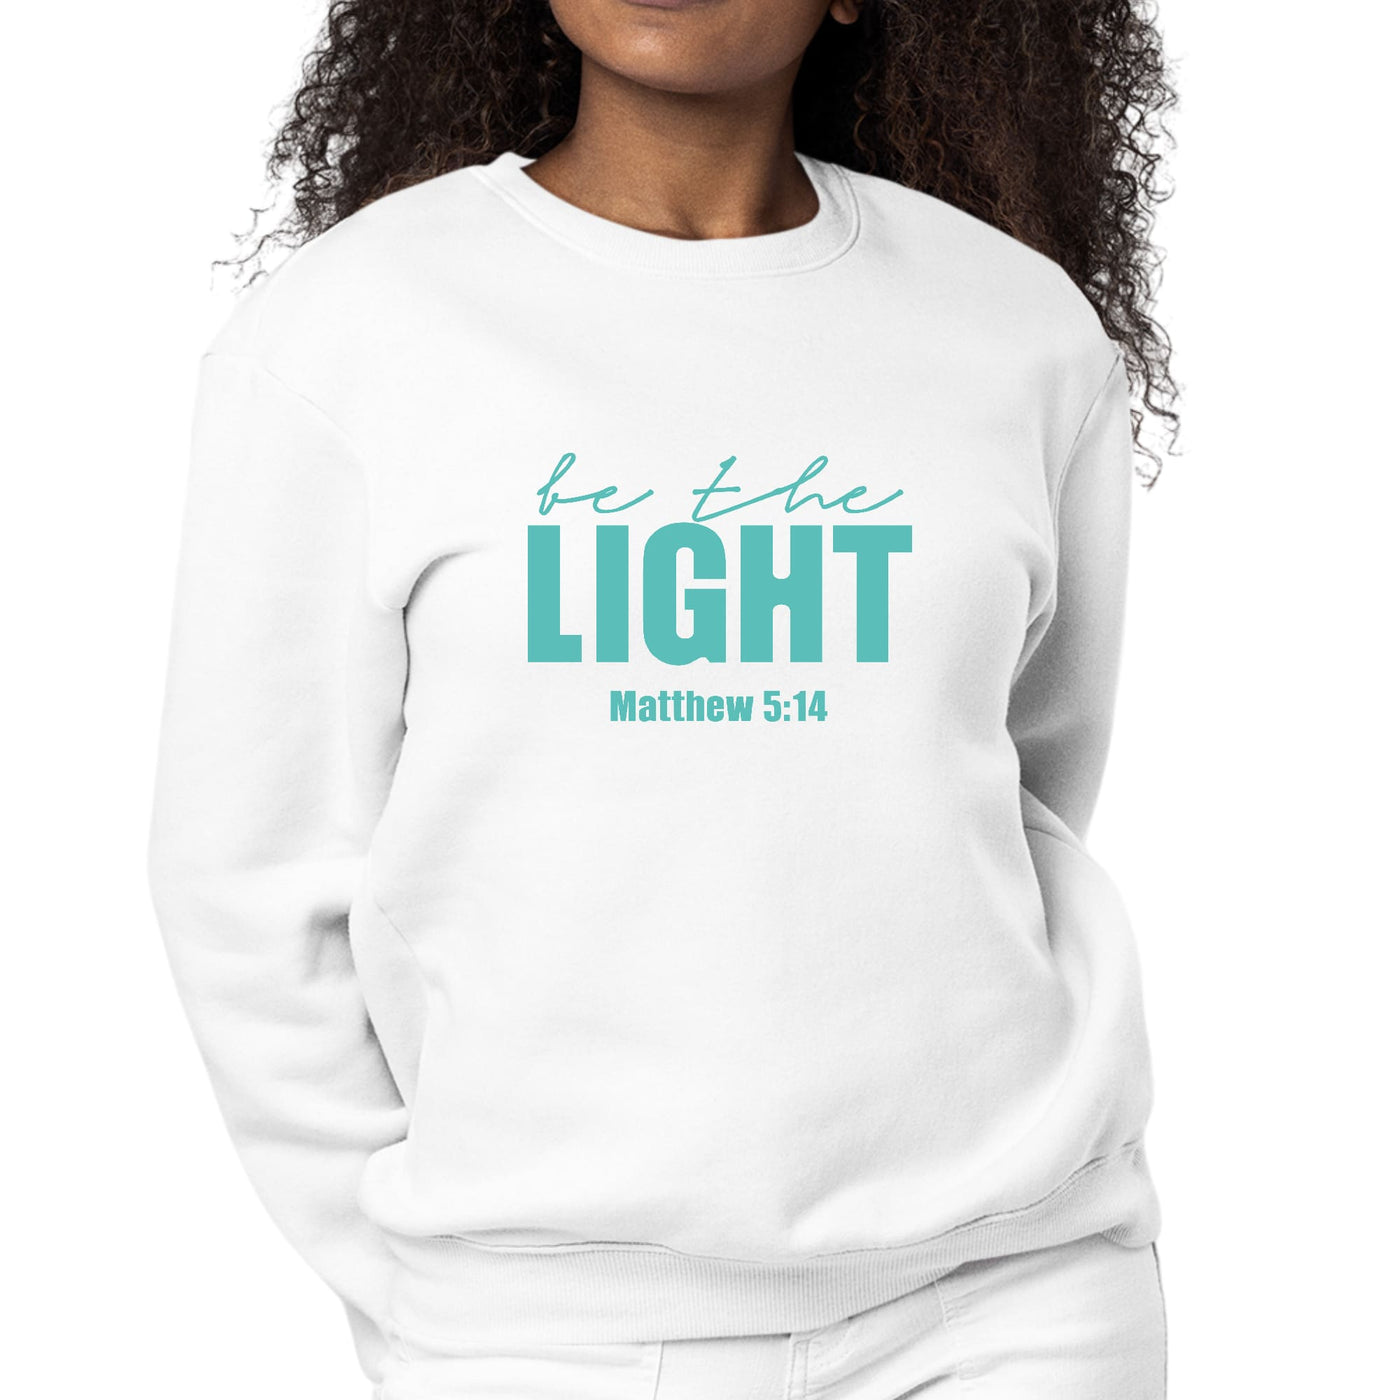 Womens Graphic Sweatshirt Be The Light Print - Sweatshirts